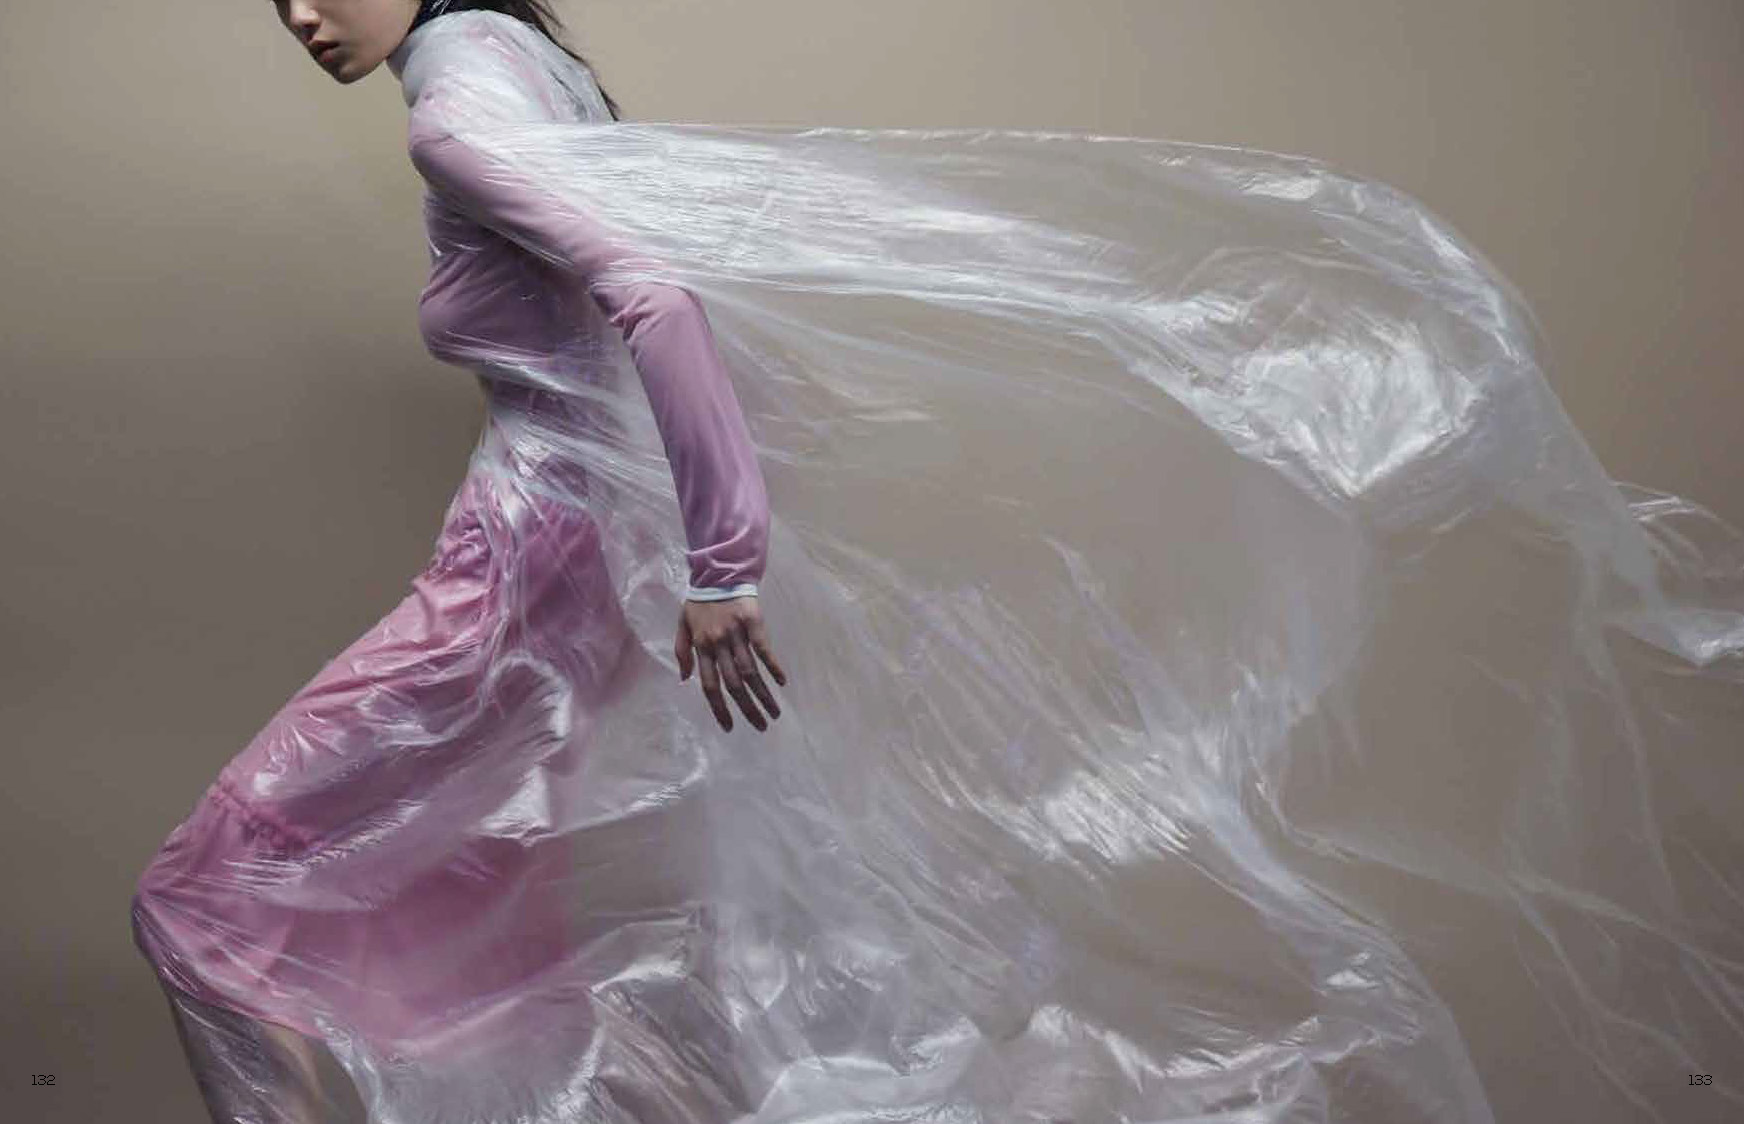  | Vogue China: An Ode To Dance | 1